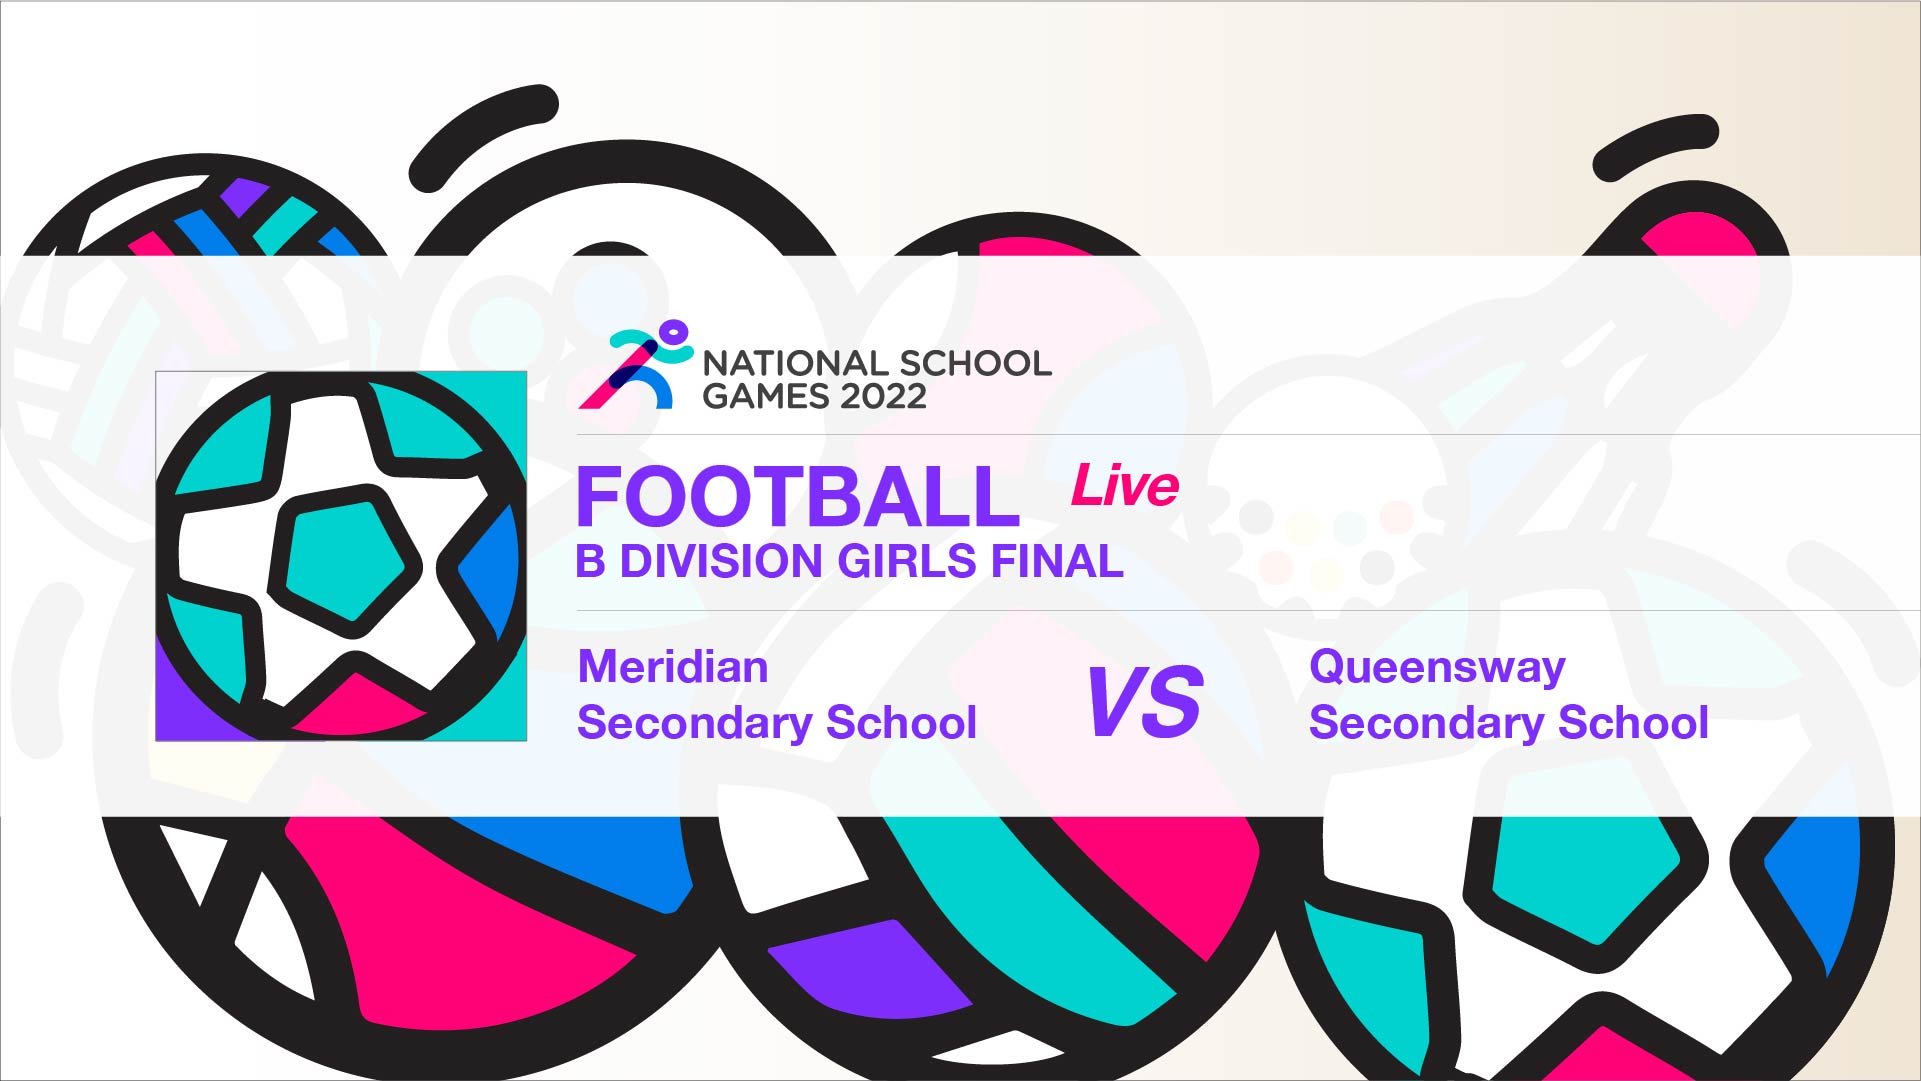 SSSC Football B Division Girls Final | Meridian Secondary School vs Queensway Secondary School